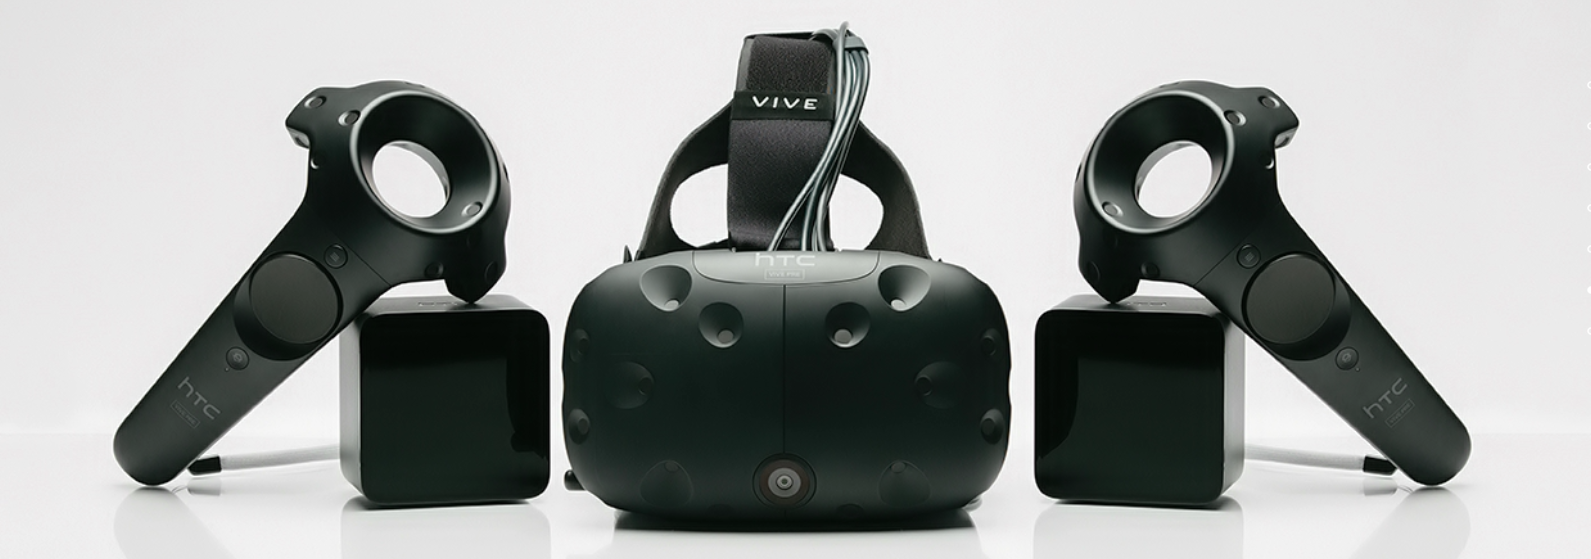 HTC_Vive_VR_Headset